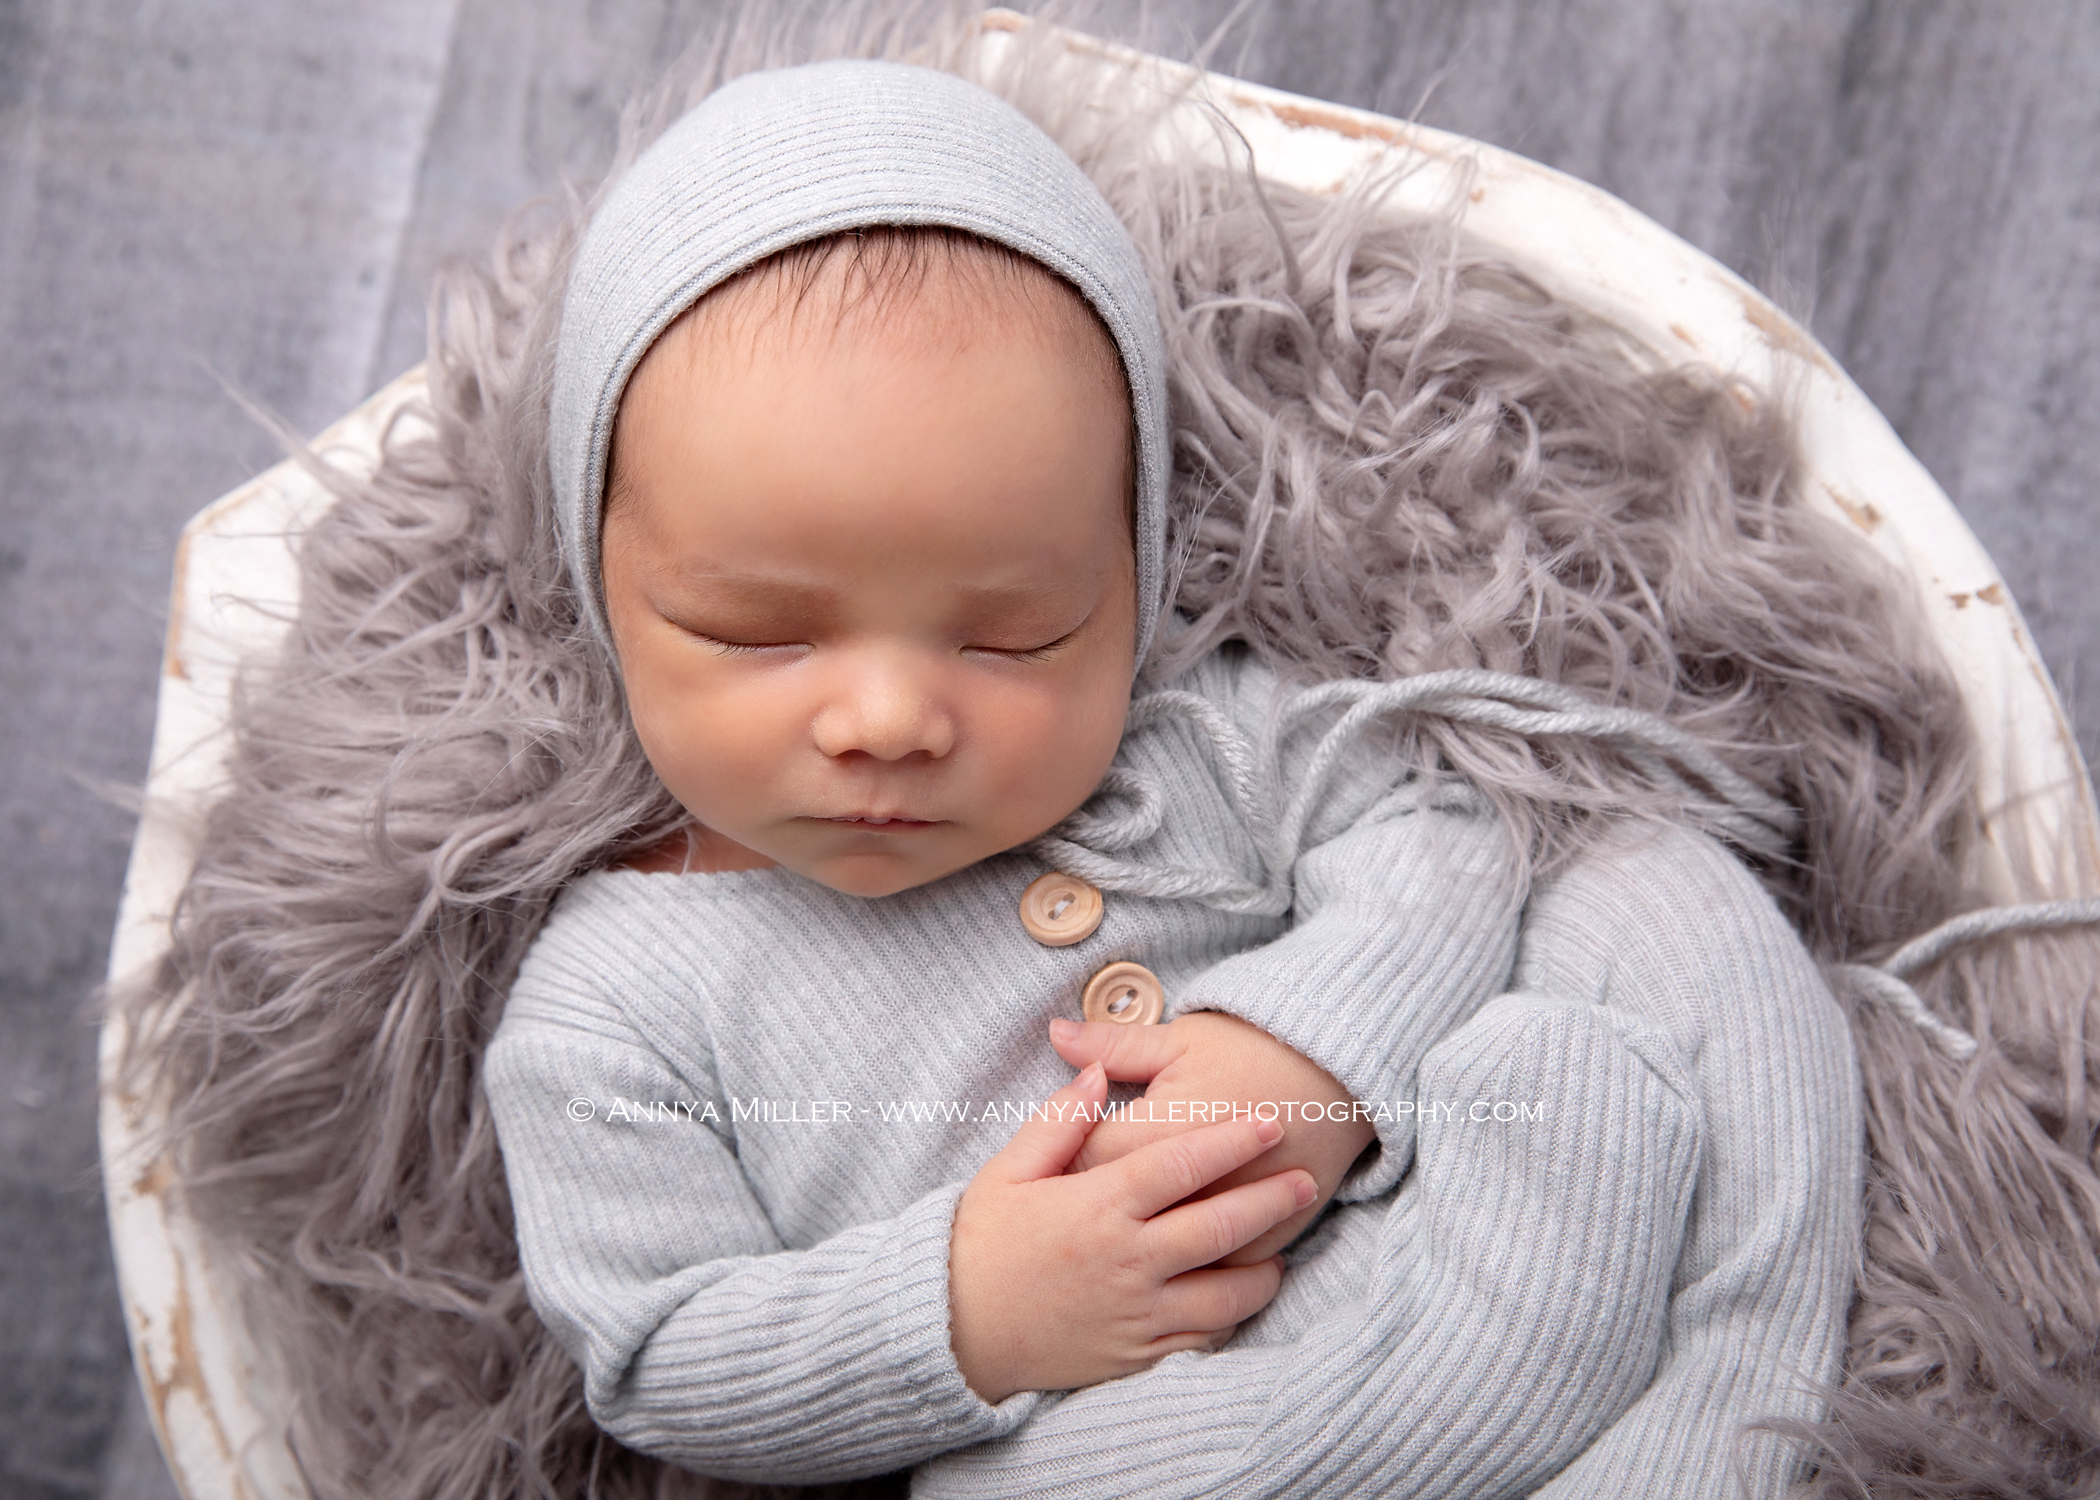 Portraits of newborn baby boy by Toronto newborn photographer Annya Miller